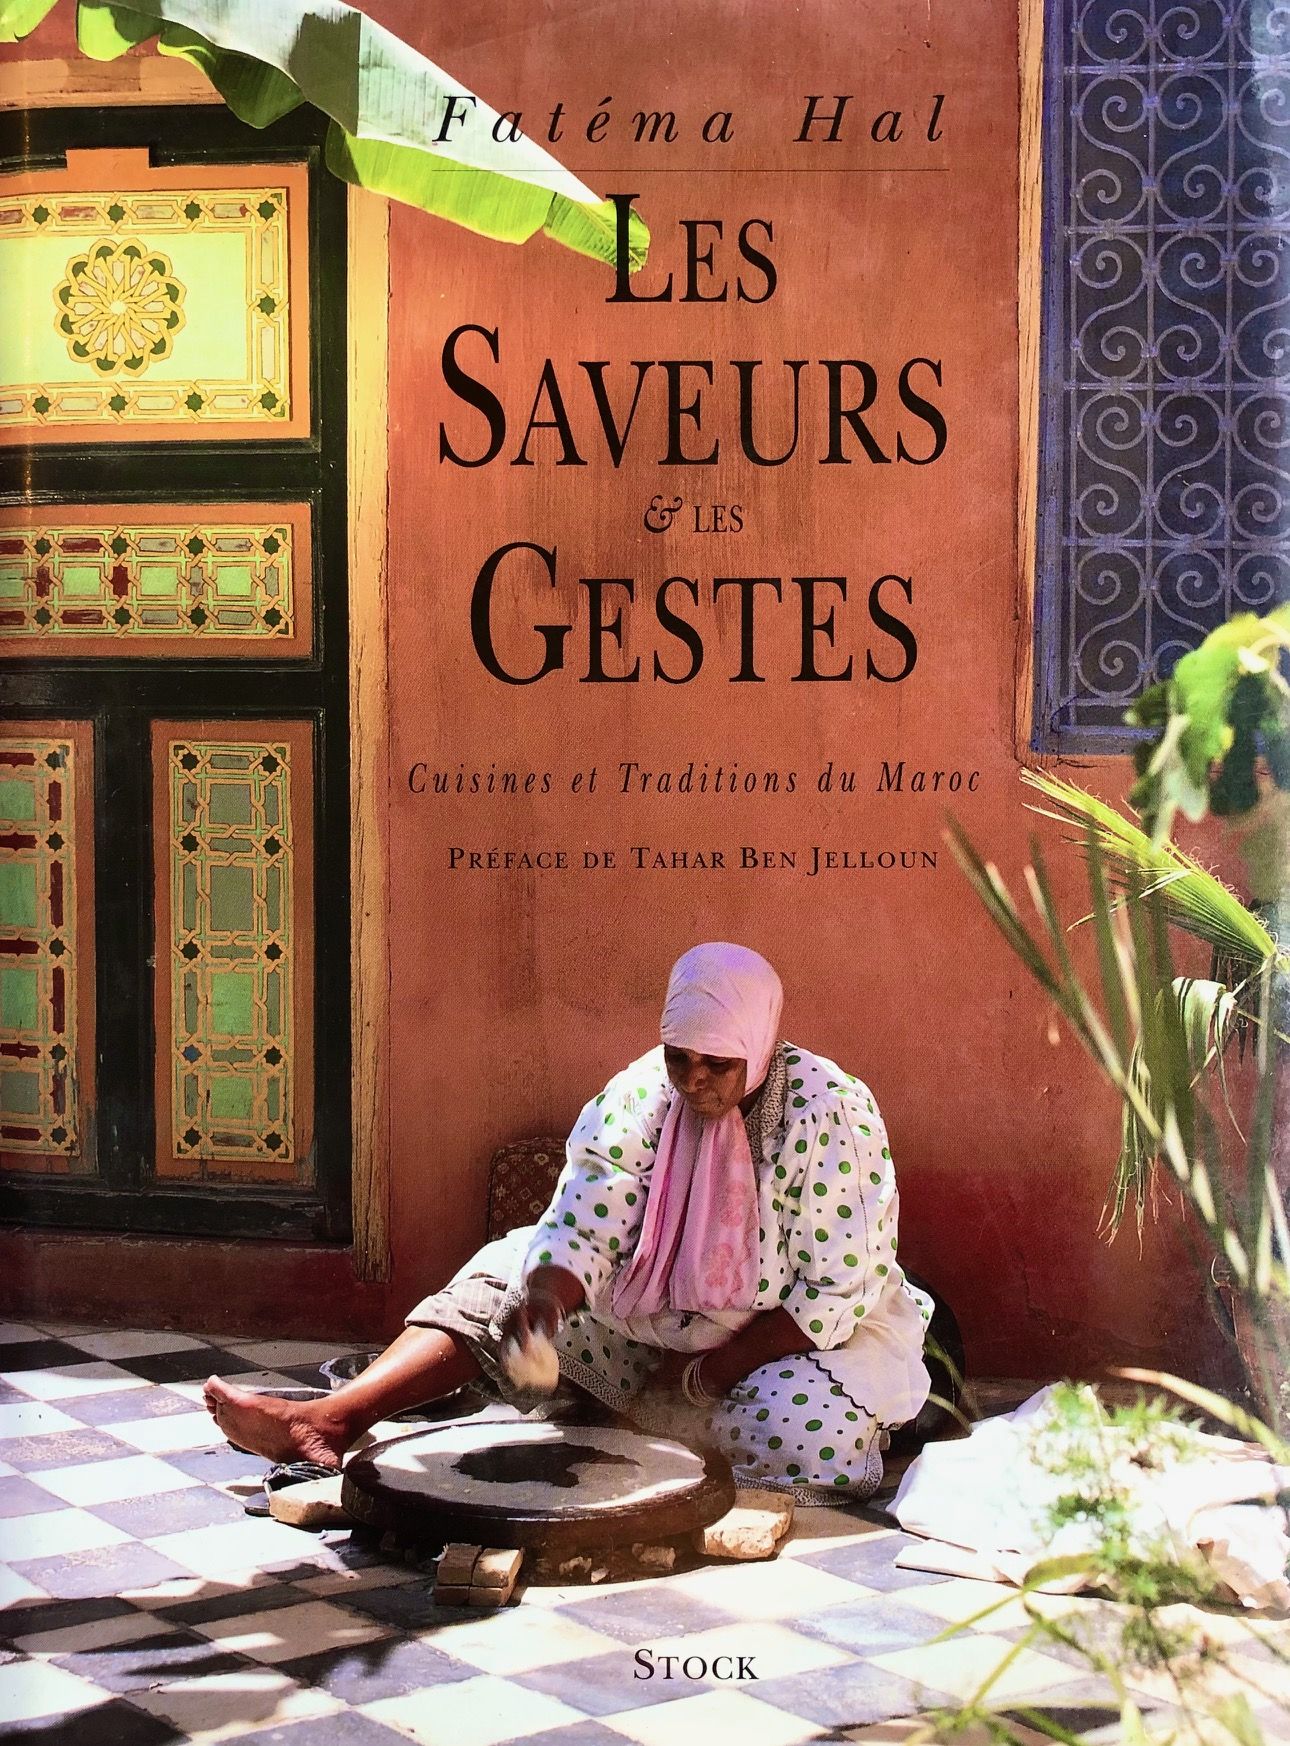 (Moroccan) Fatéma Hal. Les saveurs & les gestes: Cuisines et traditions du Maroc